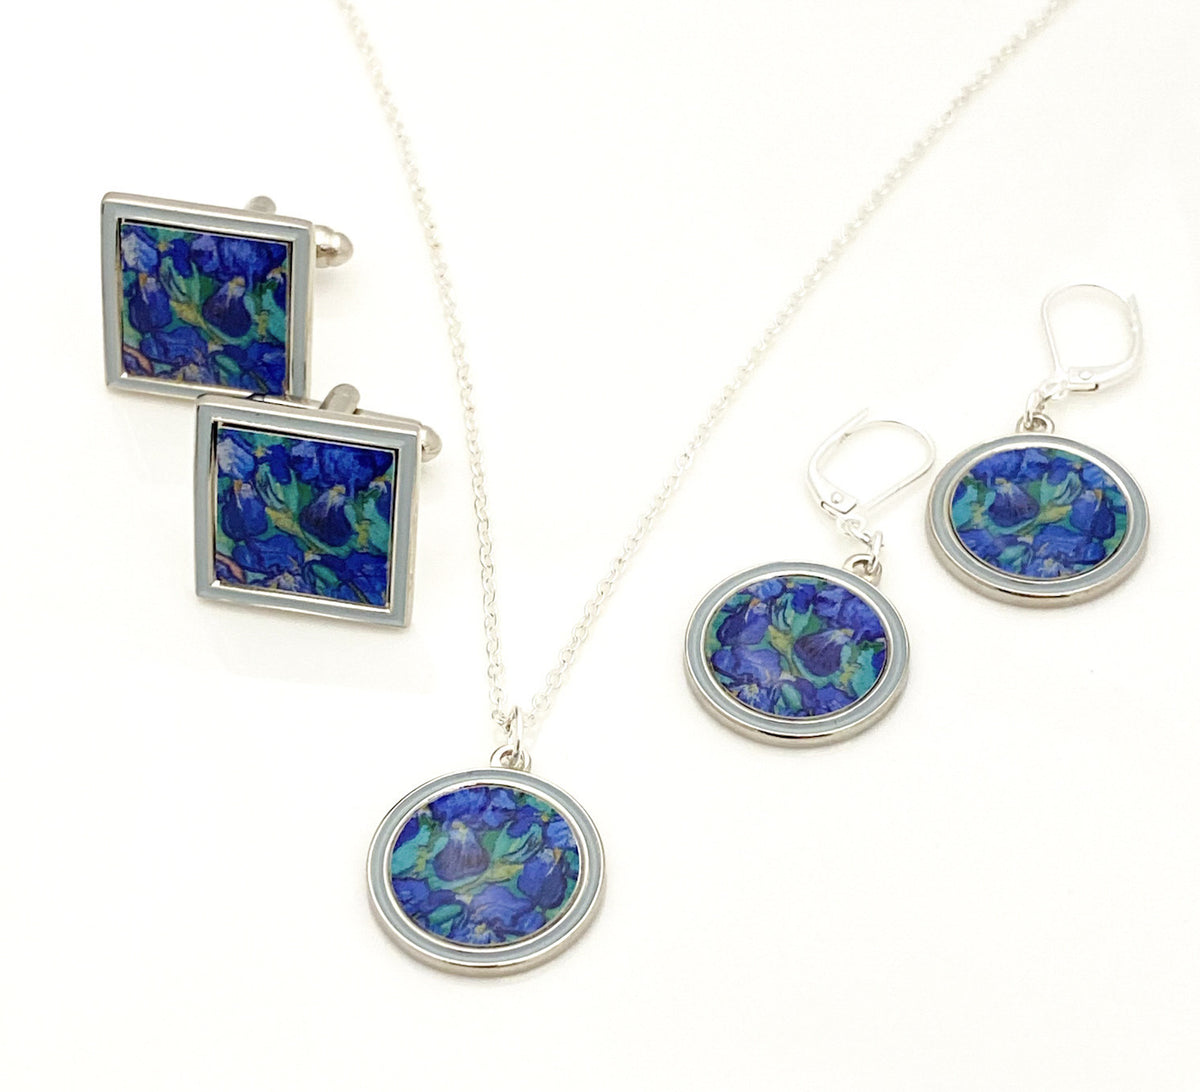 Van Gogh Irises Circle Pendant Necklace - Silver - Plate